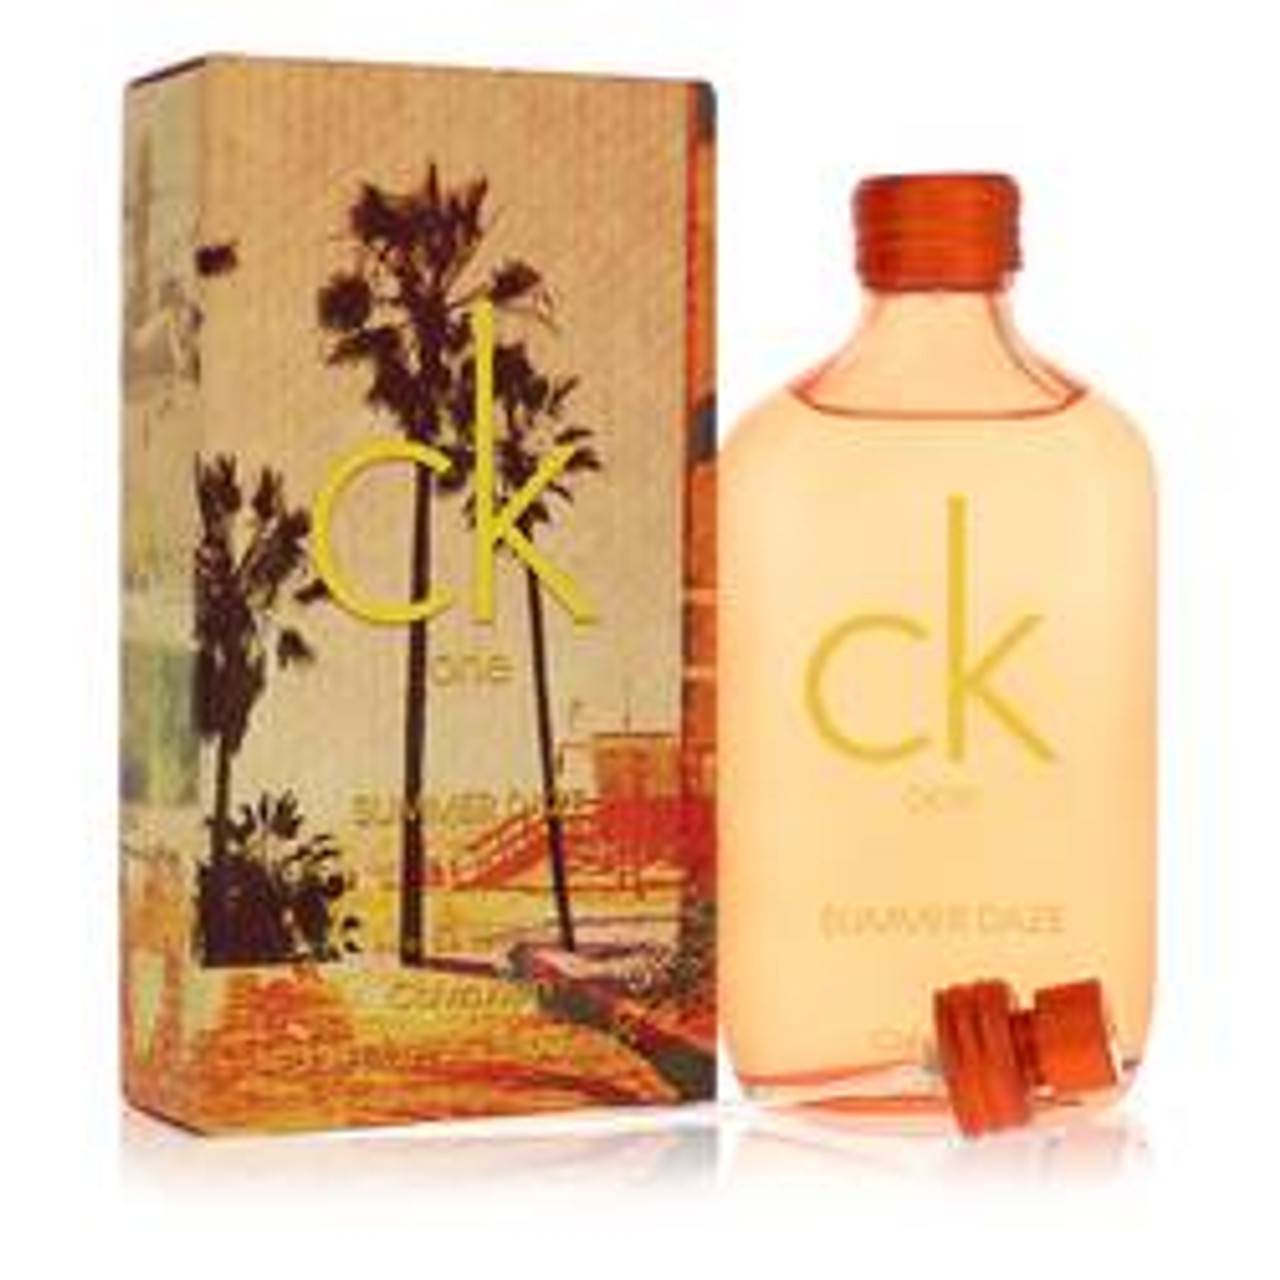 Ck One Summer Daze Cologne By Calvin Klein Eau De Toilette Spray (Unisex) 3.3 oz for Men - [From 96.00 - Choose pk Qty ] - *Ships from Miami